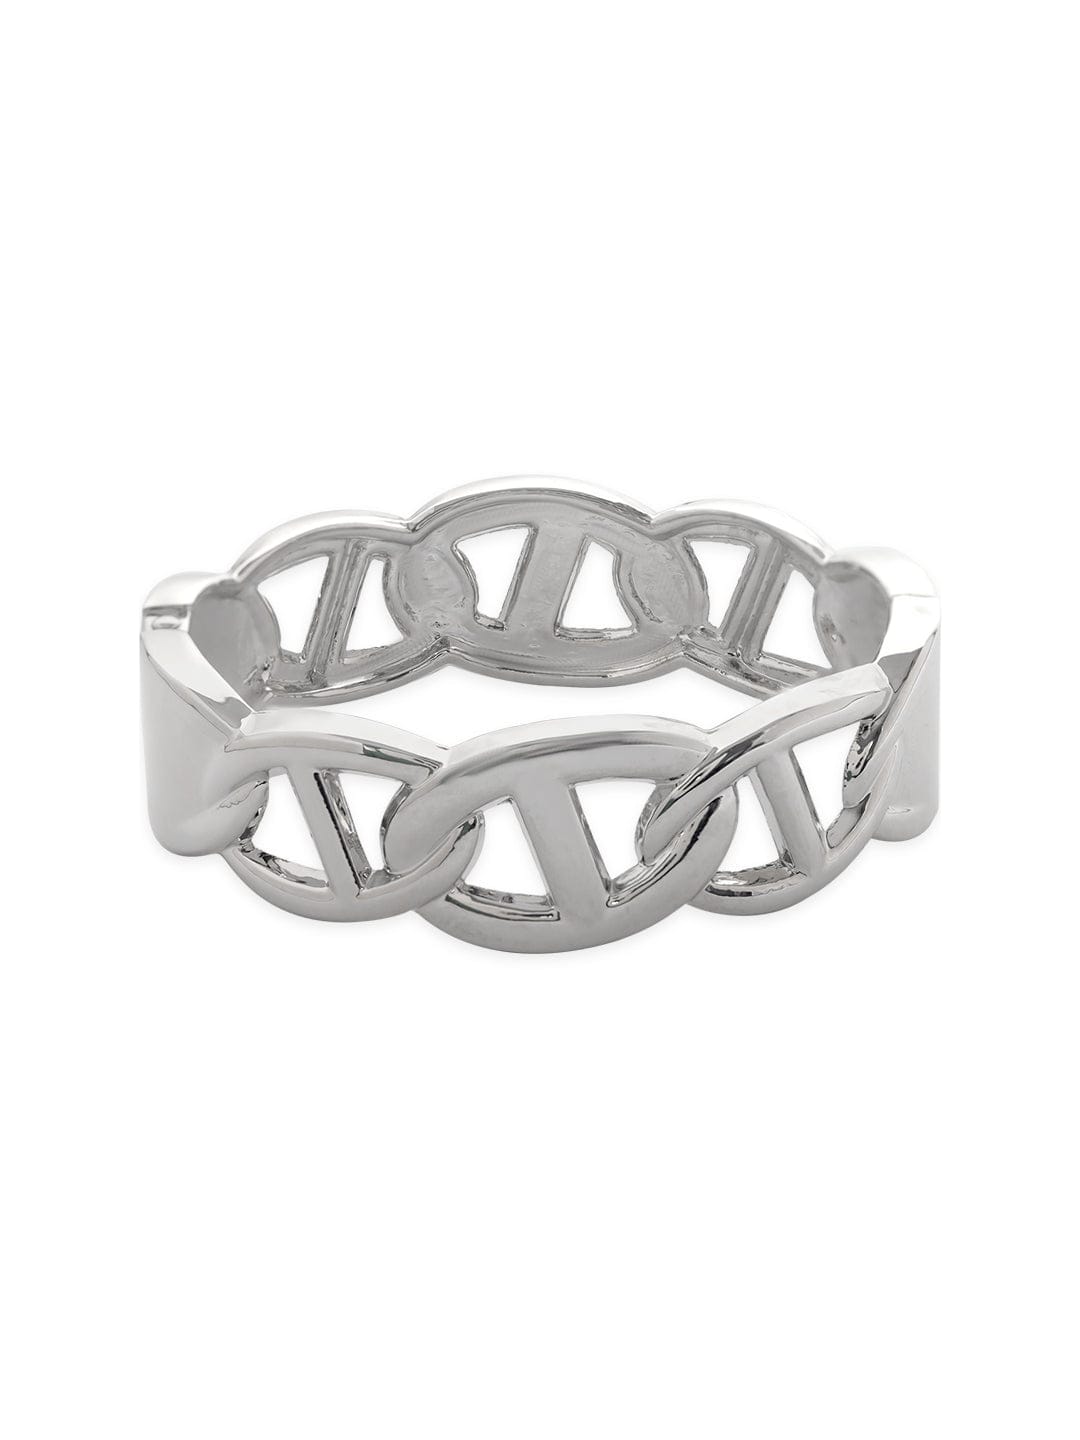 Rubans Voguish Silver Gleam: Set of 2 Silver-Colored Bracelets Bangles & Bracelets